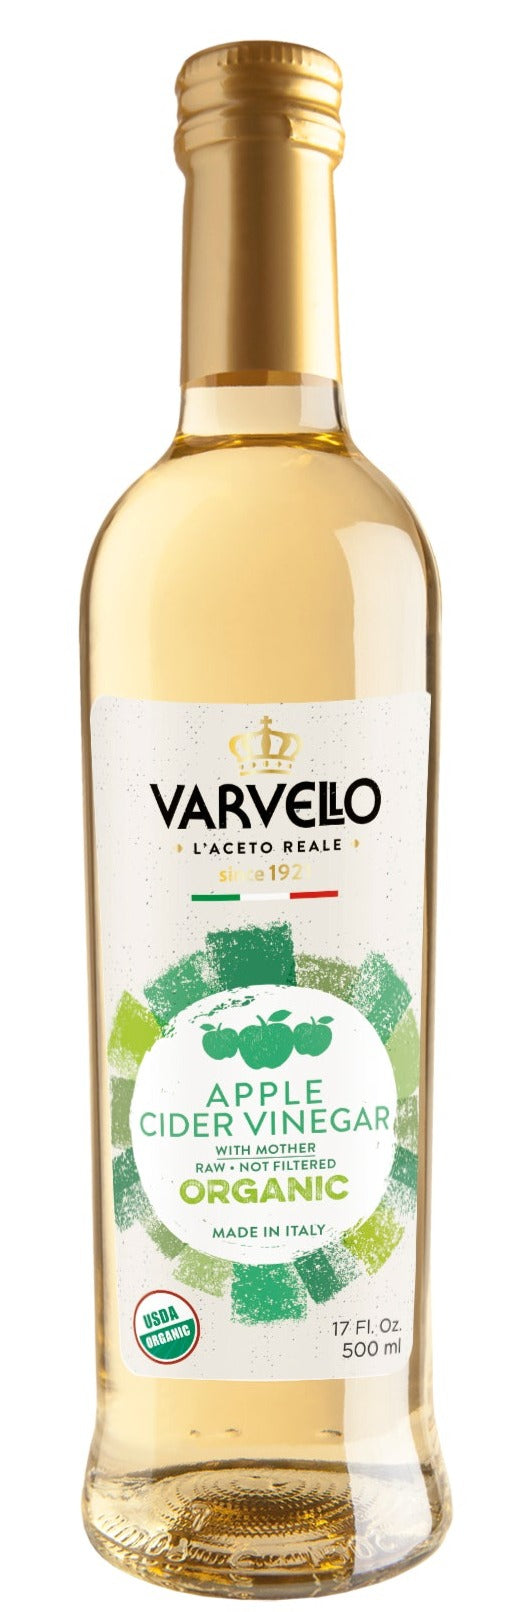 Varvello Organic Apple Cider Vinegar Aged in Wooden Barrels, 17 oz